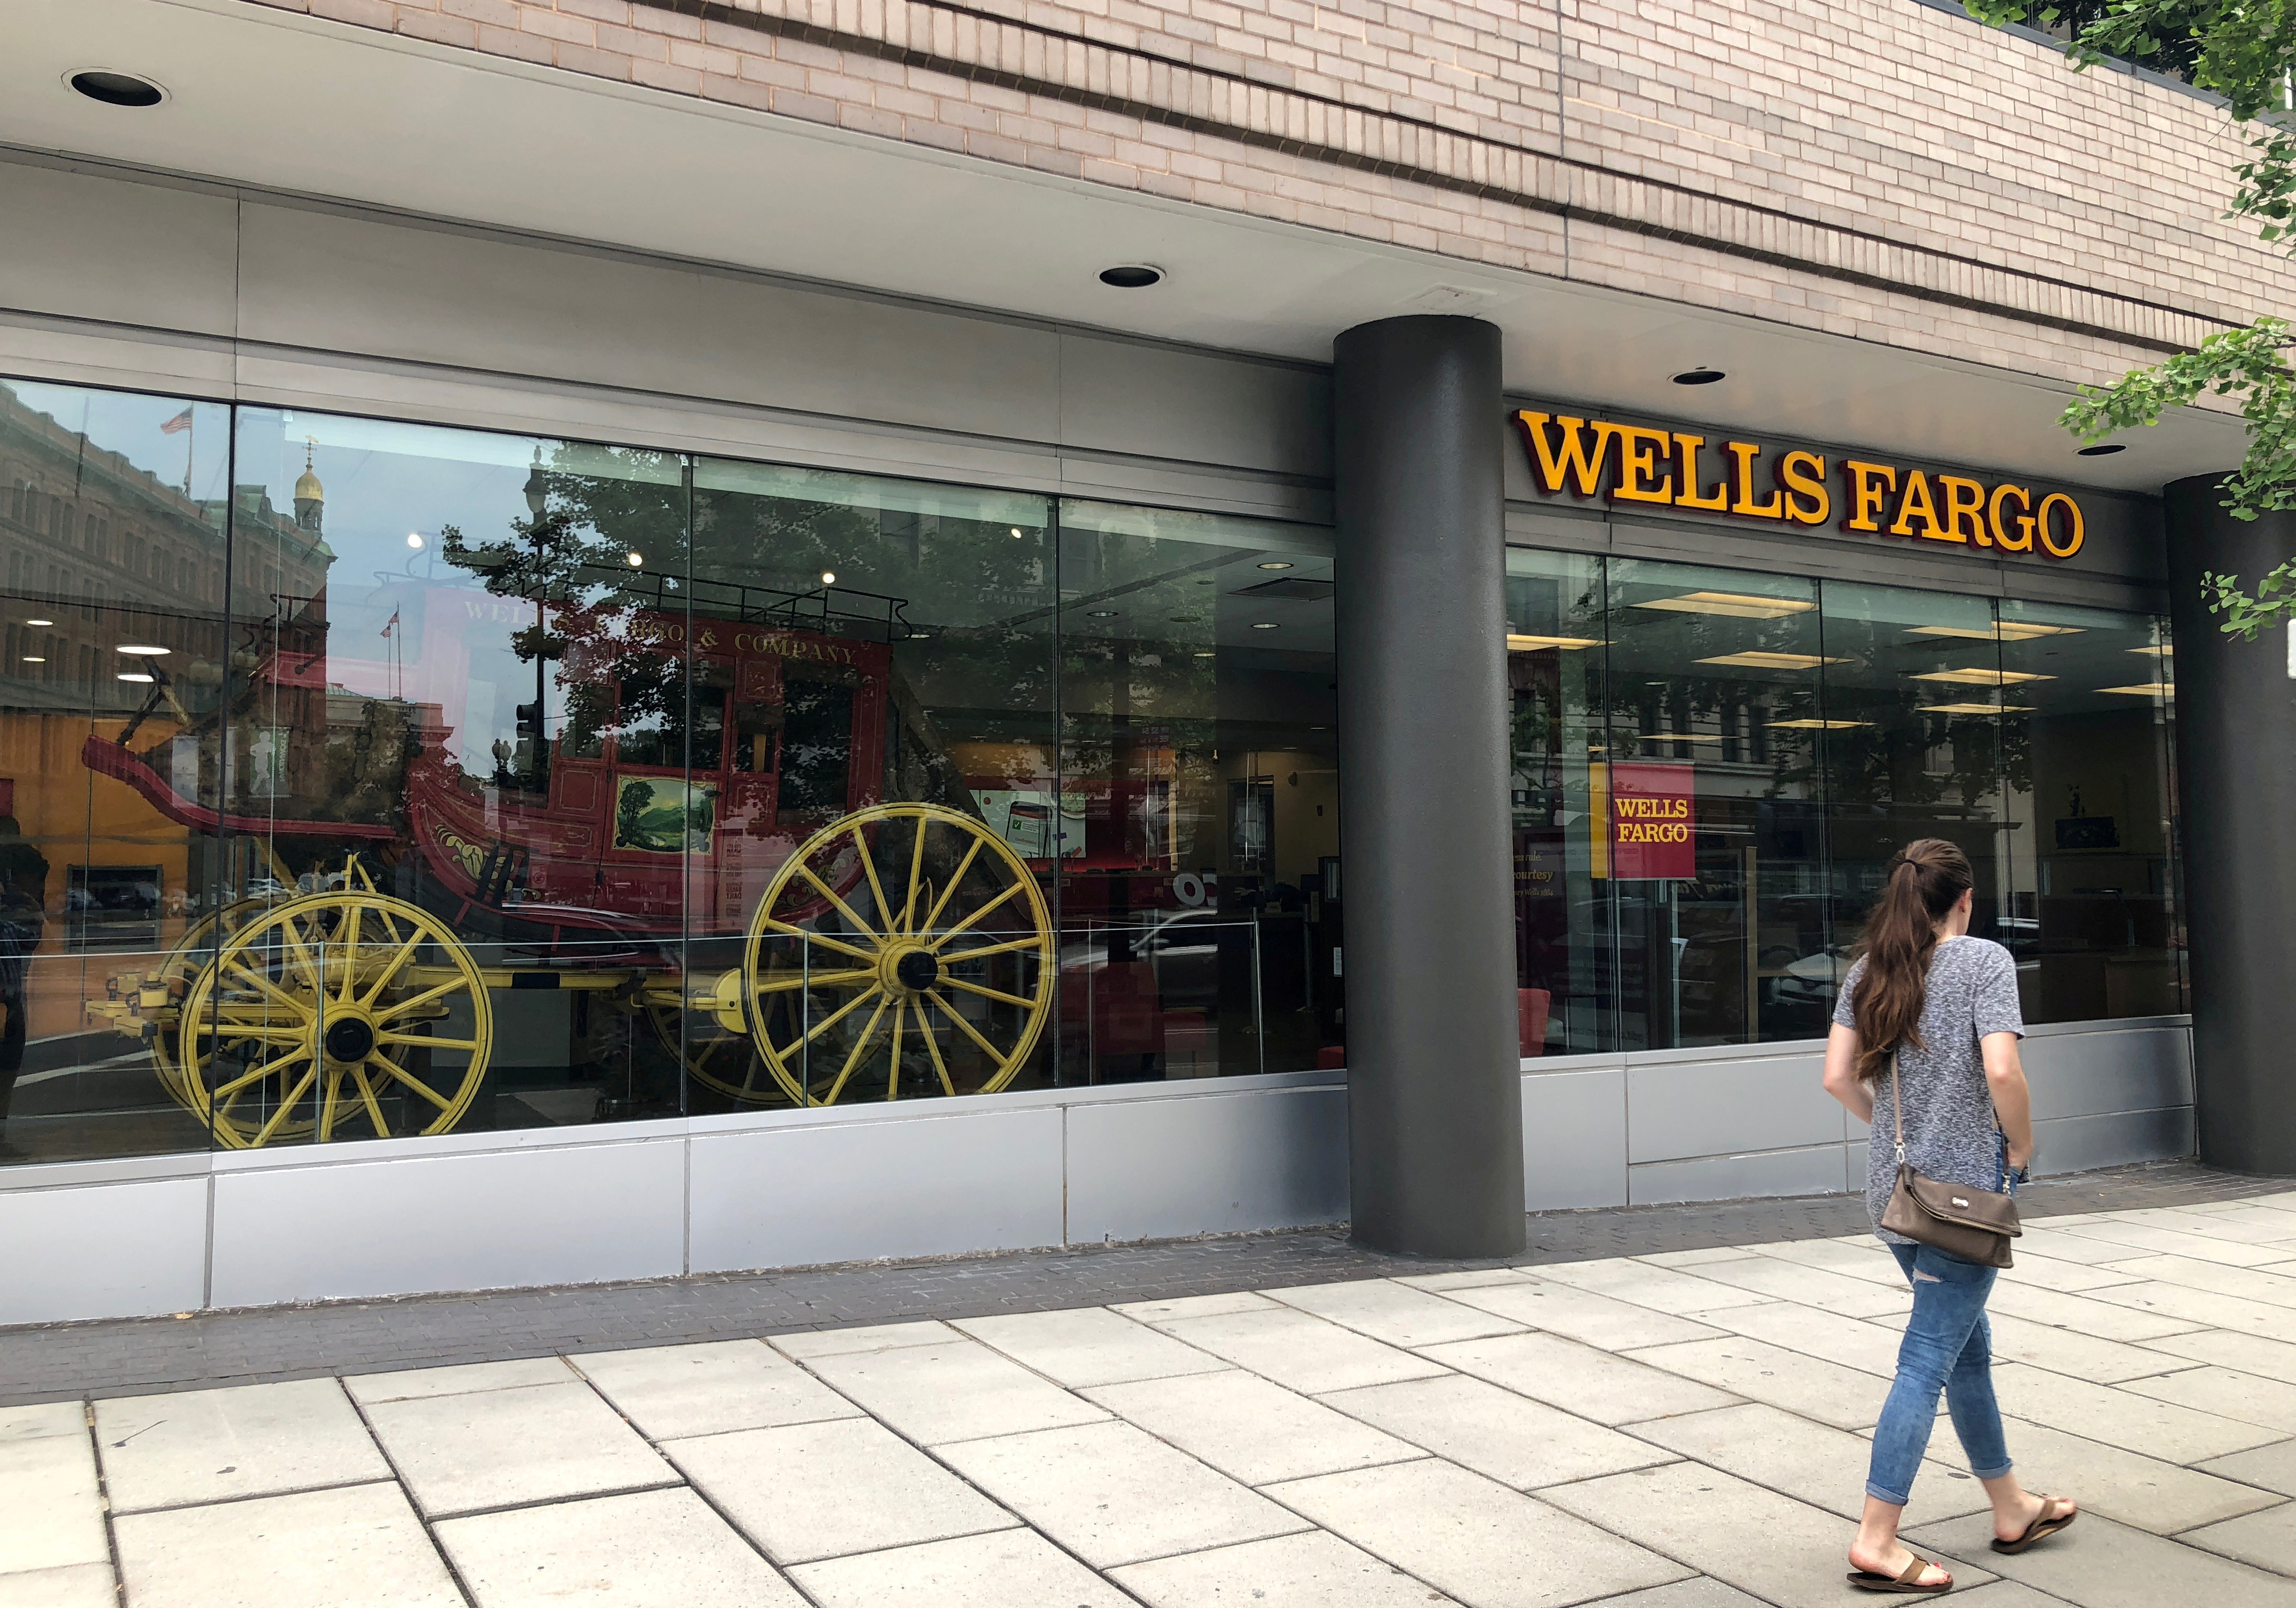 A lady walks by a Wells Fargo bank branch in Washington